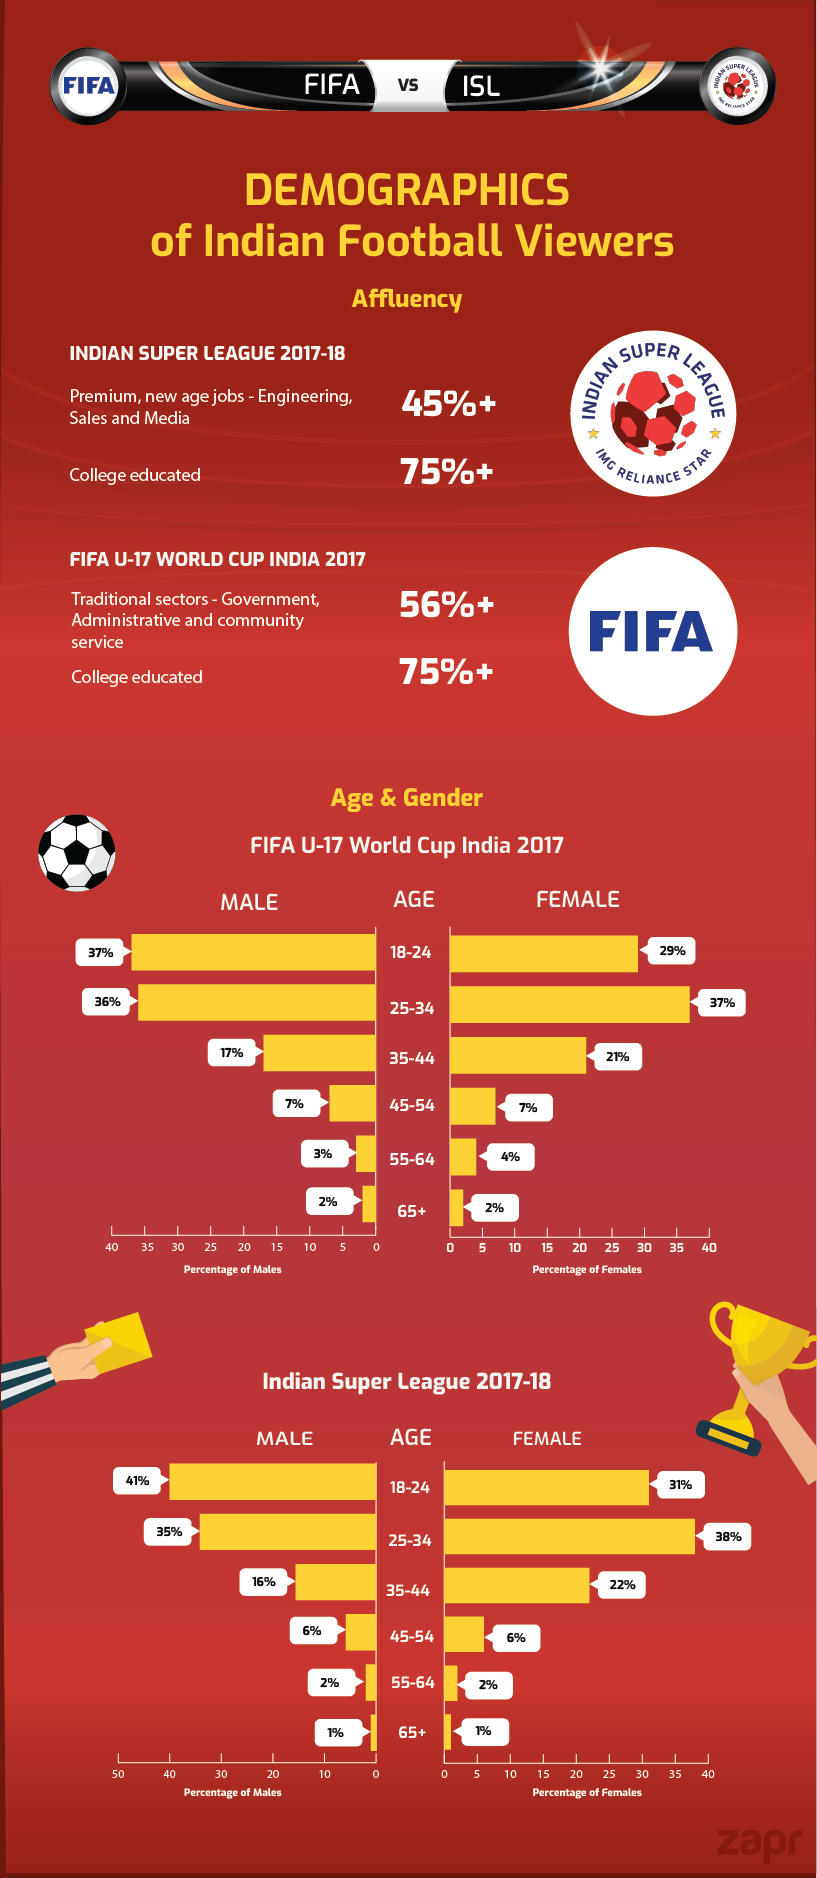 FIFA U-17, ISL TV viewership demography, affluency